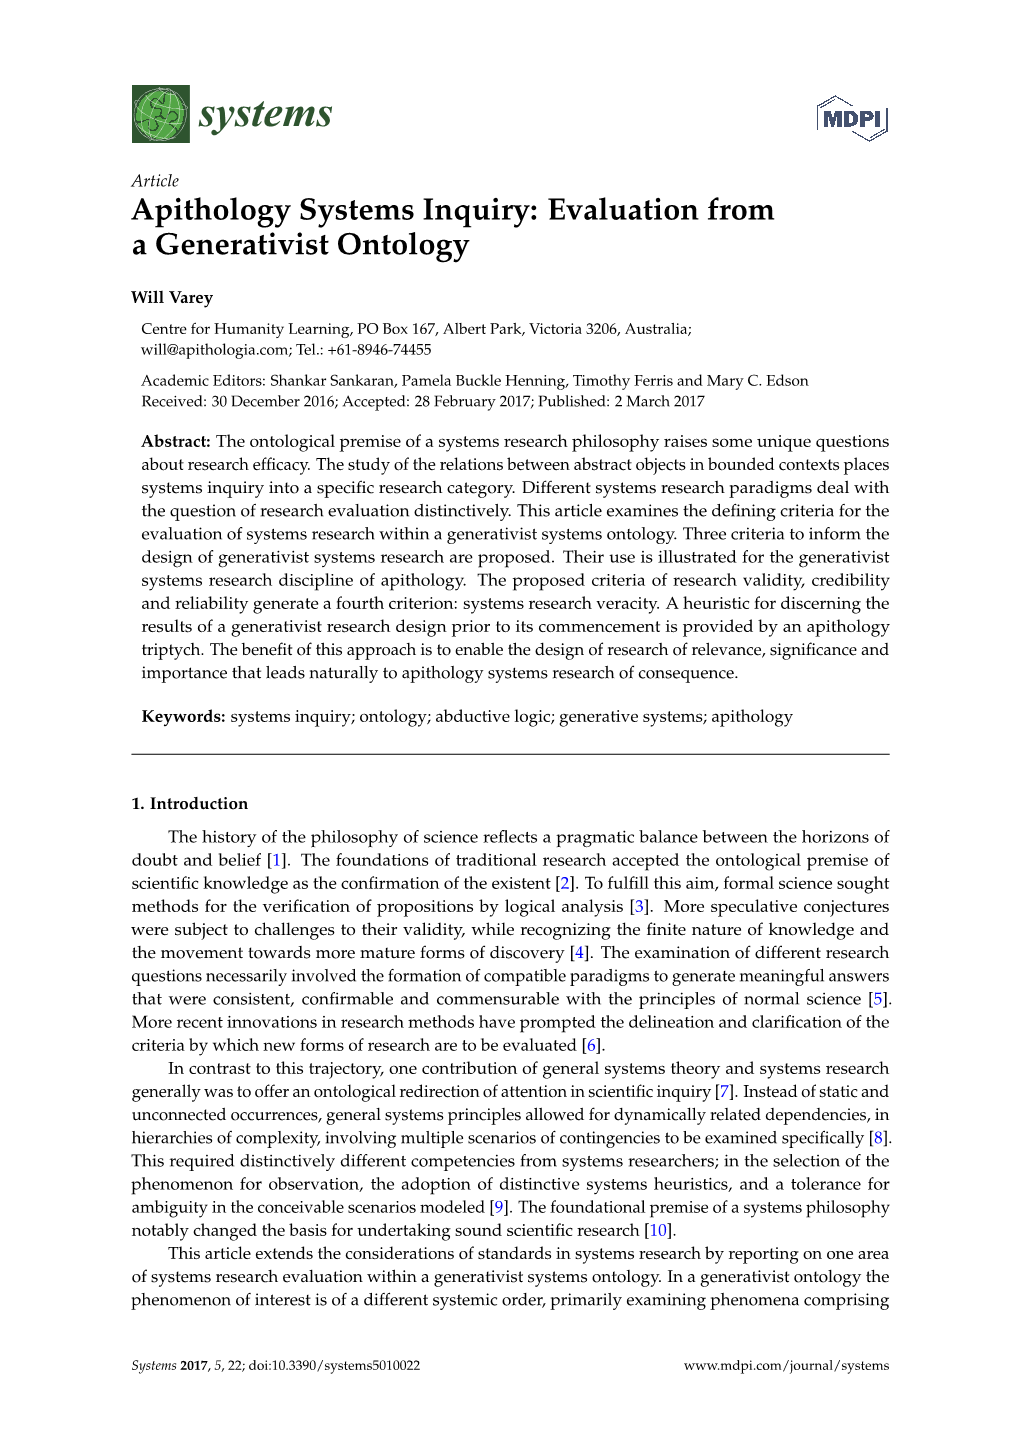 Apithology Systems Inquiry: Evaluation from a Generativist Ontology